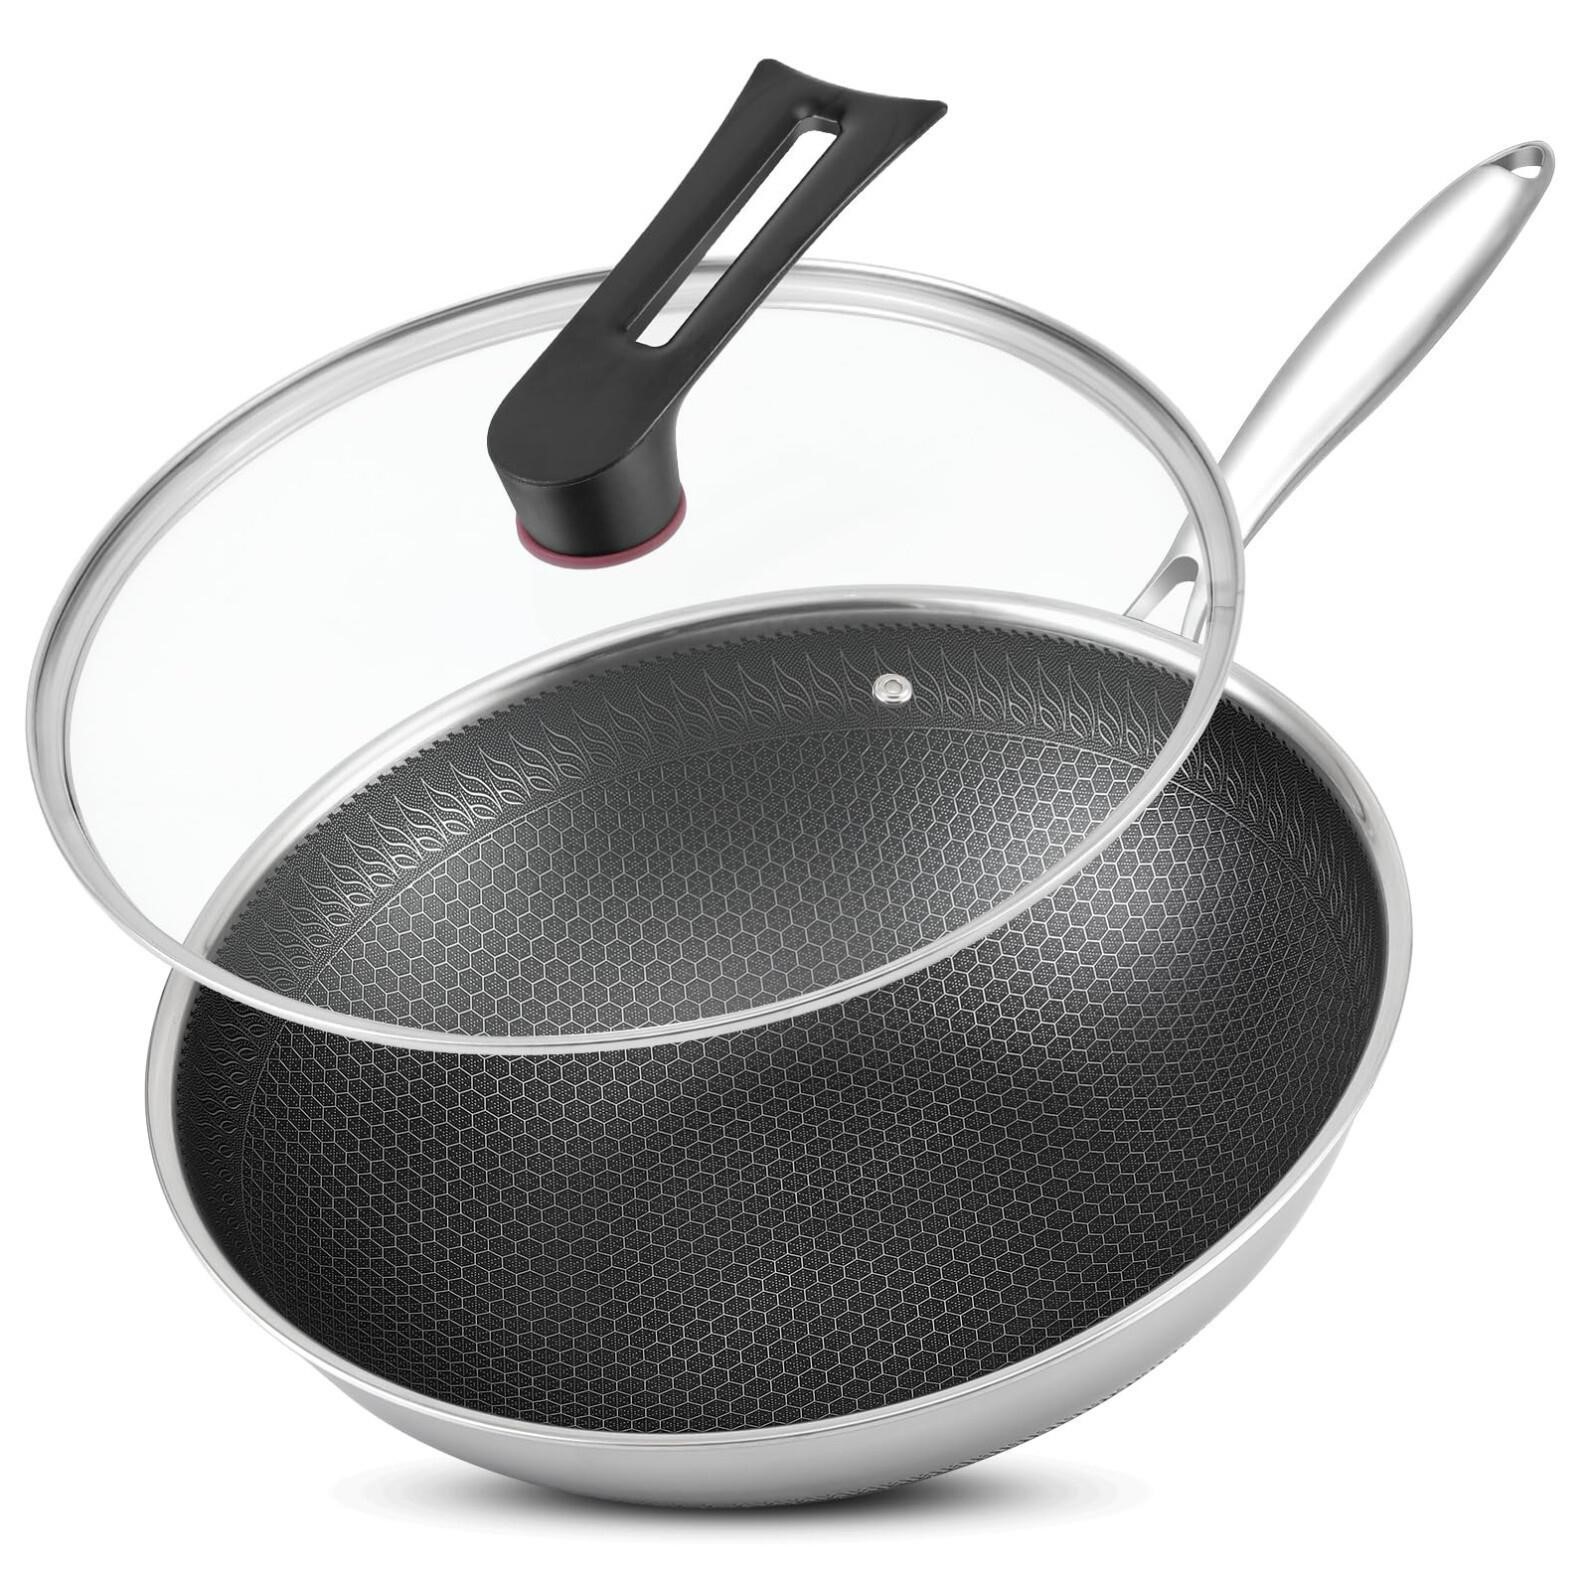 Vegoran 12 inch Wok Pan,Stainless Steel Stir-fry W